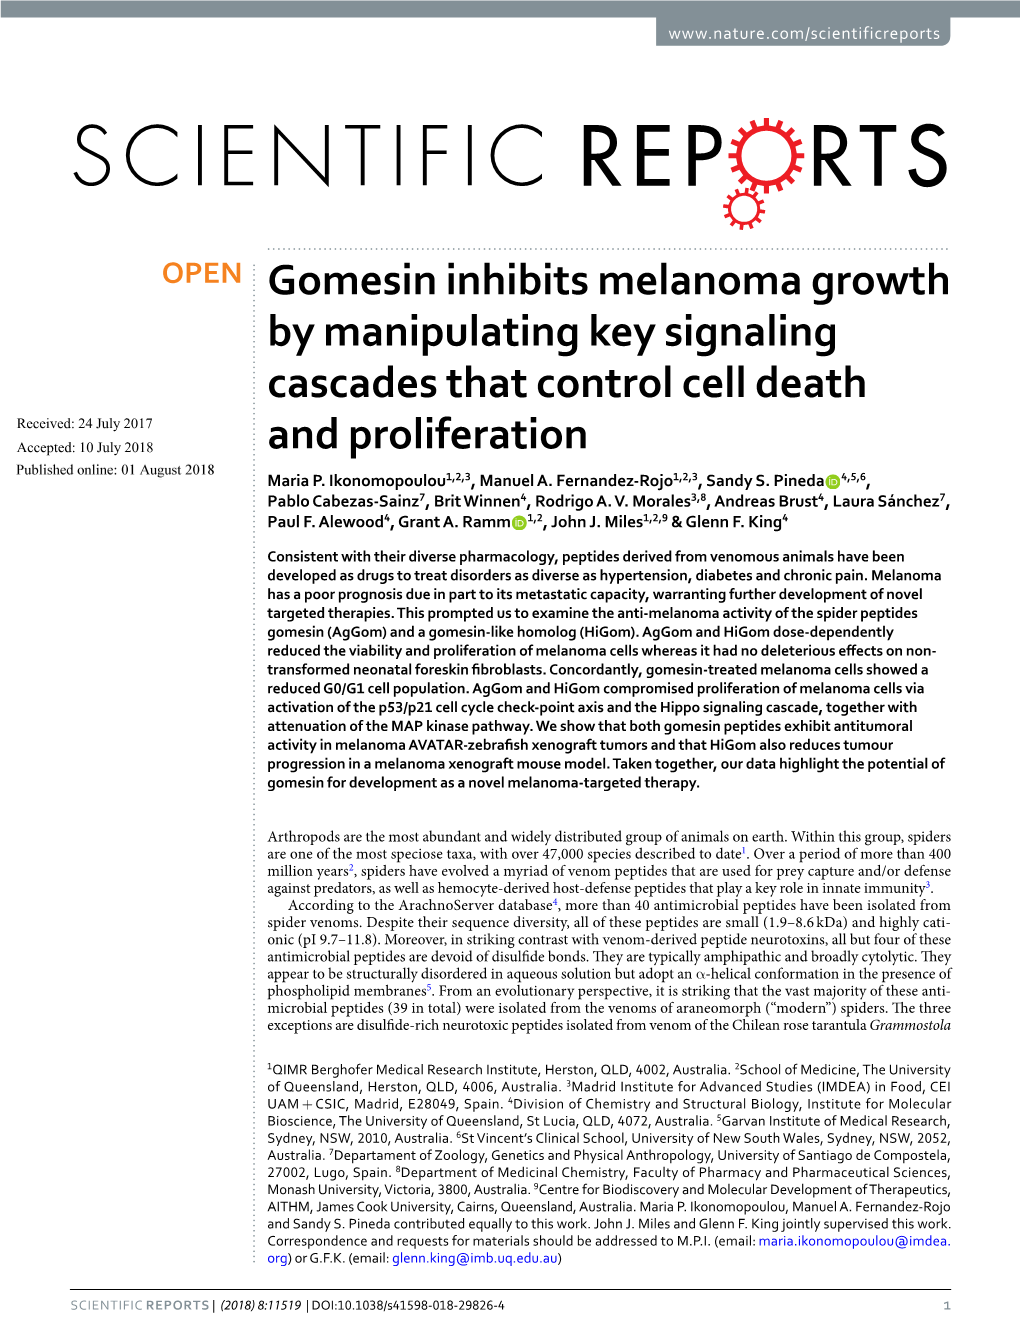 Gomesin Inhibits Melanoma Growth by Manipulating Key Signaling